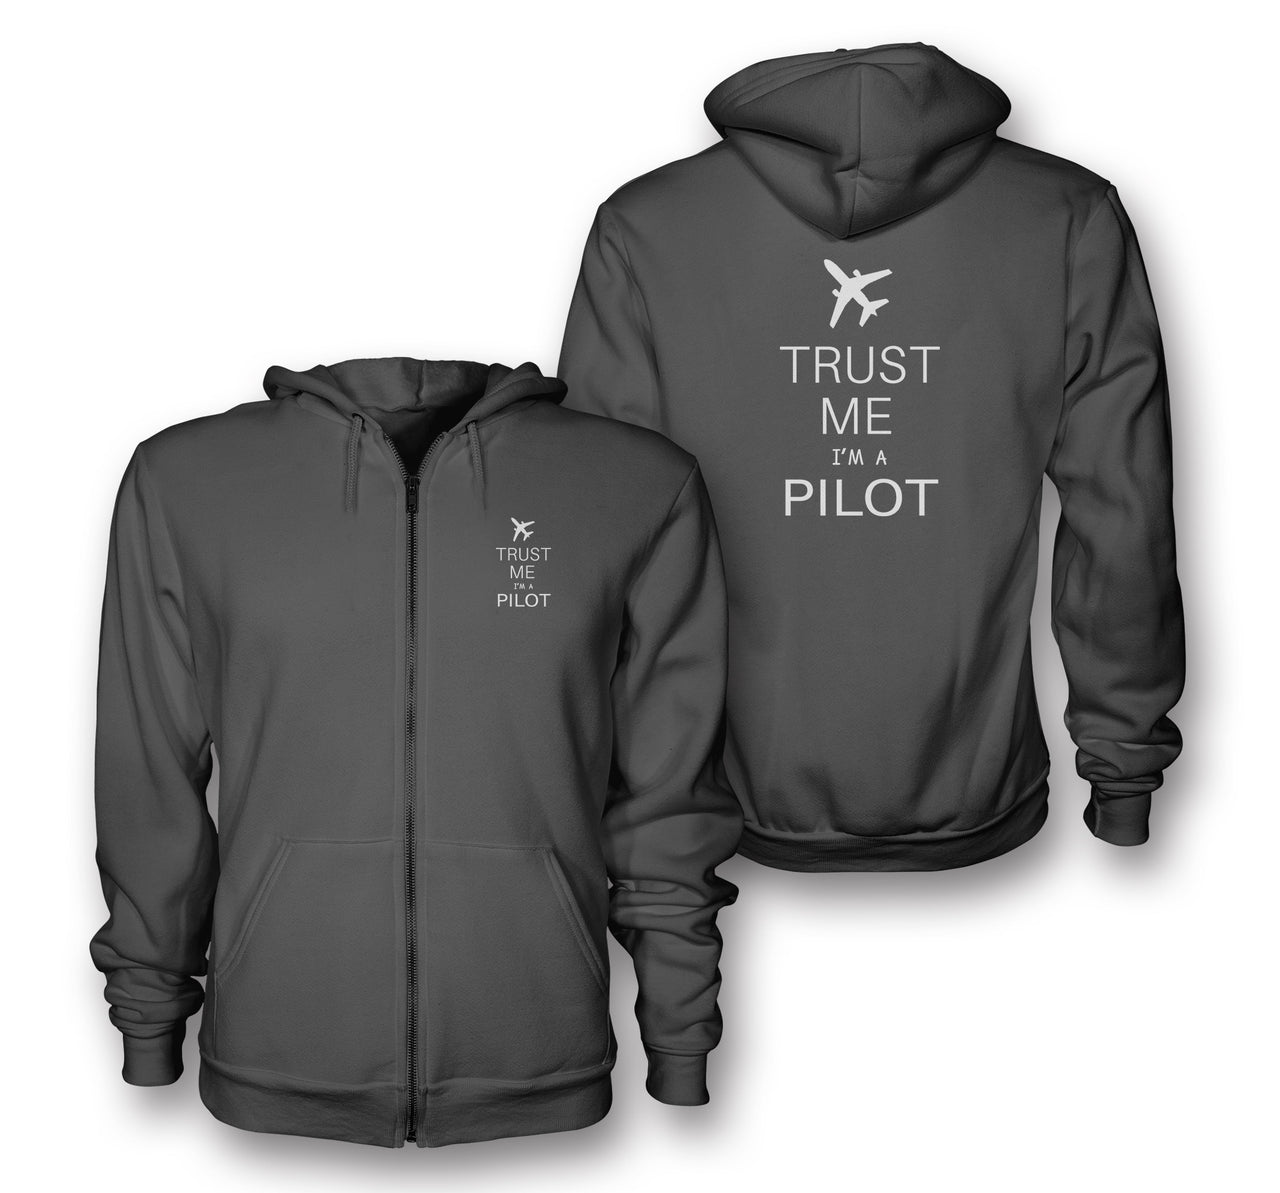 Trust Me I'm a Pilot 2 Designed Zipped Hoodies